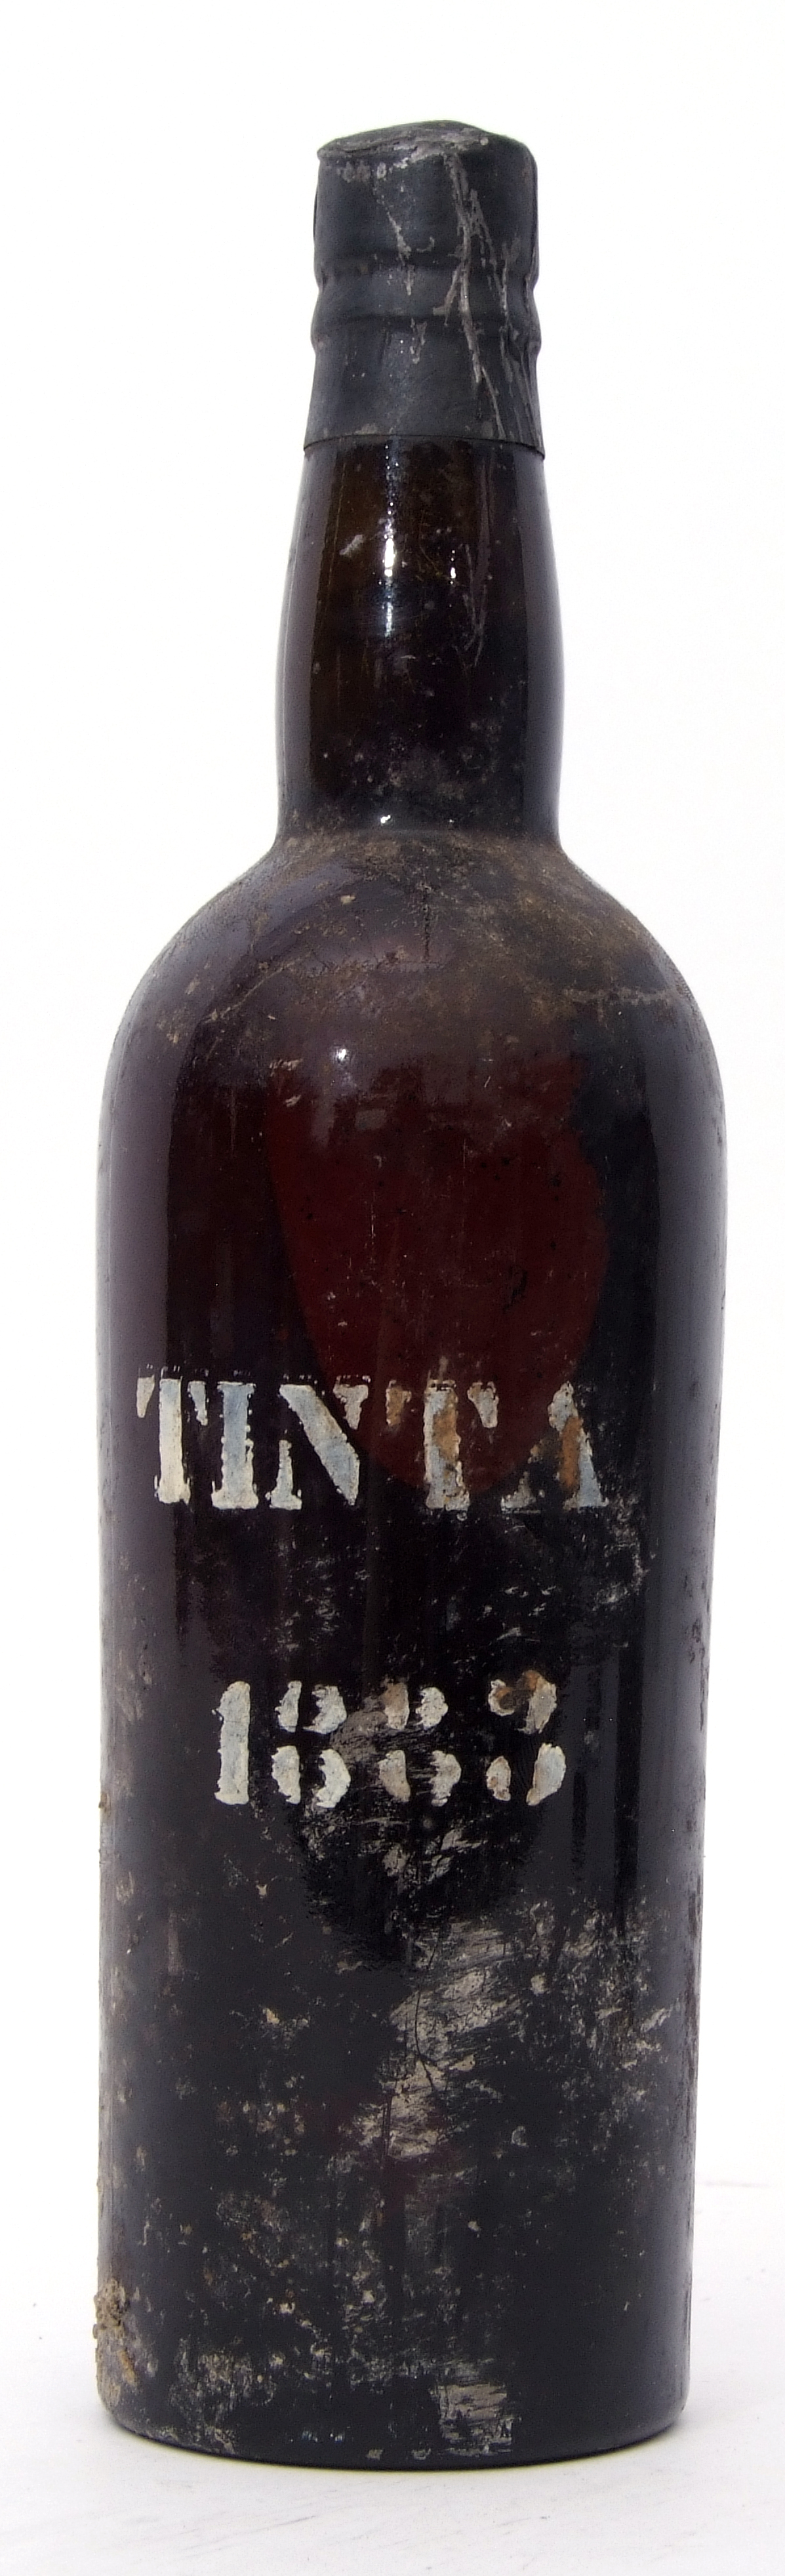 Madeira Tinta vintage 1888 or 83 (unclear), 1 bottle